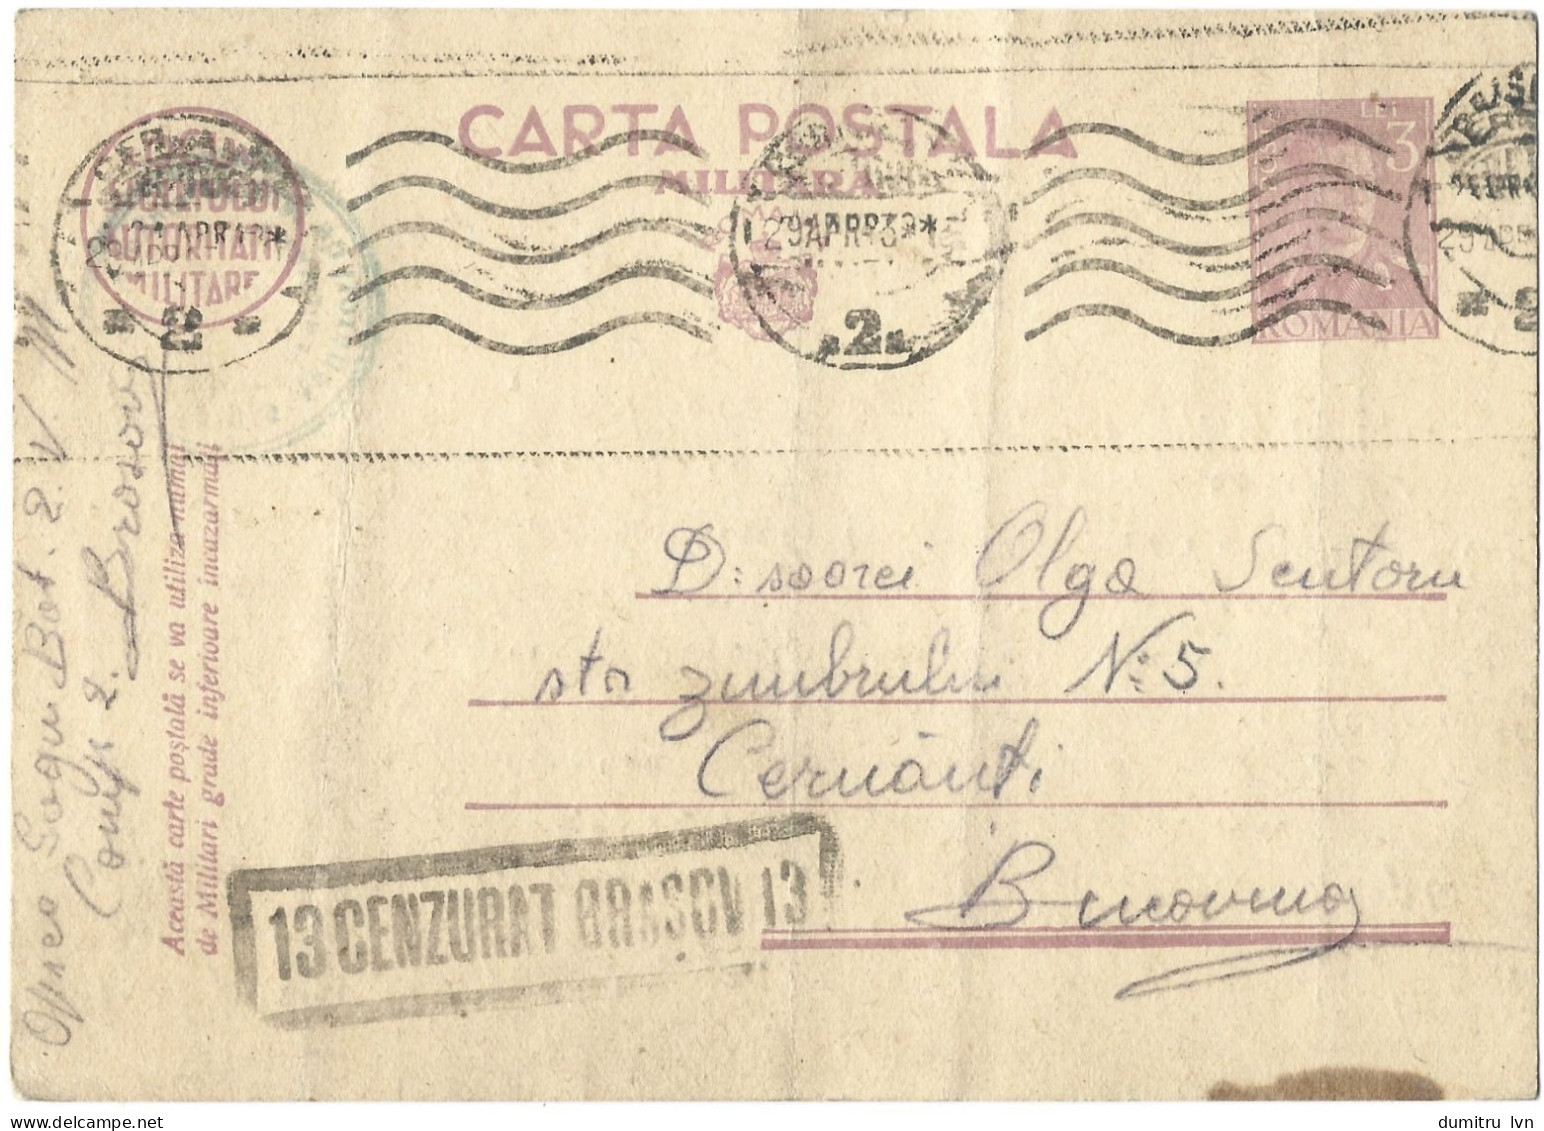 ROMANIA 1943 MILITARY POSTCARD, MILITARY CENSORED, CENSORED BRASOV 13, CERNAUTI STAMP, POSTCARD STATIONERY - World War 2 Letters